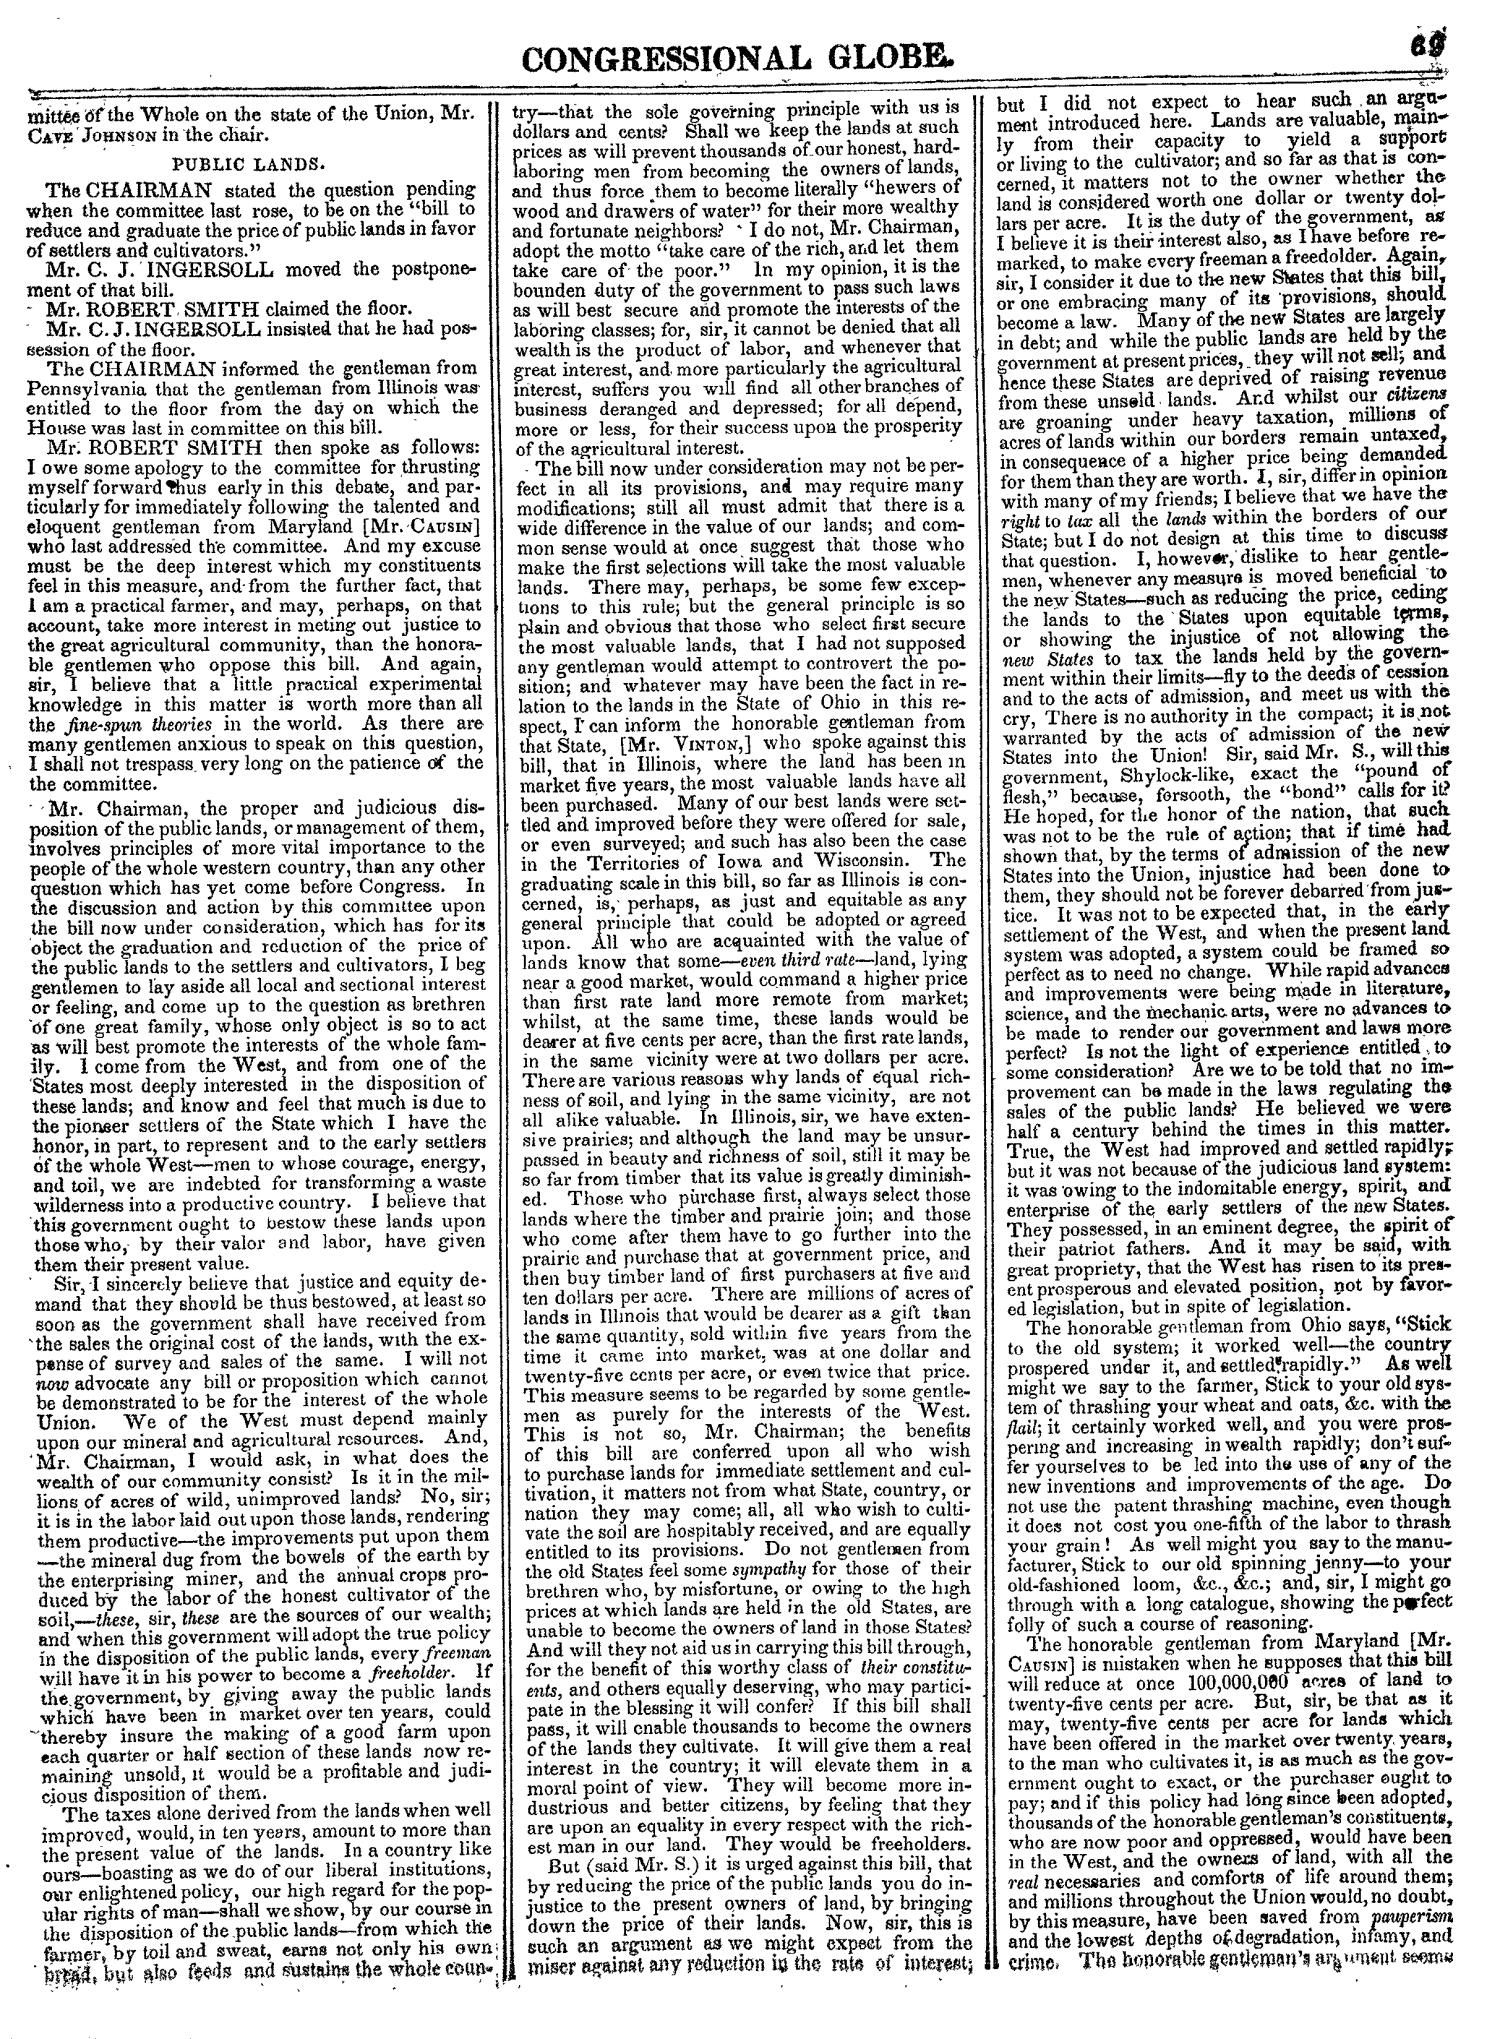 The Congressional Globe, Volume 14: Twenty-Eighth Congress, Second Session
                                                
                                                    69
                                                